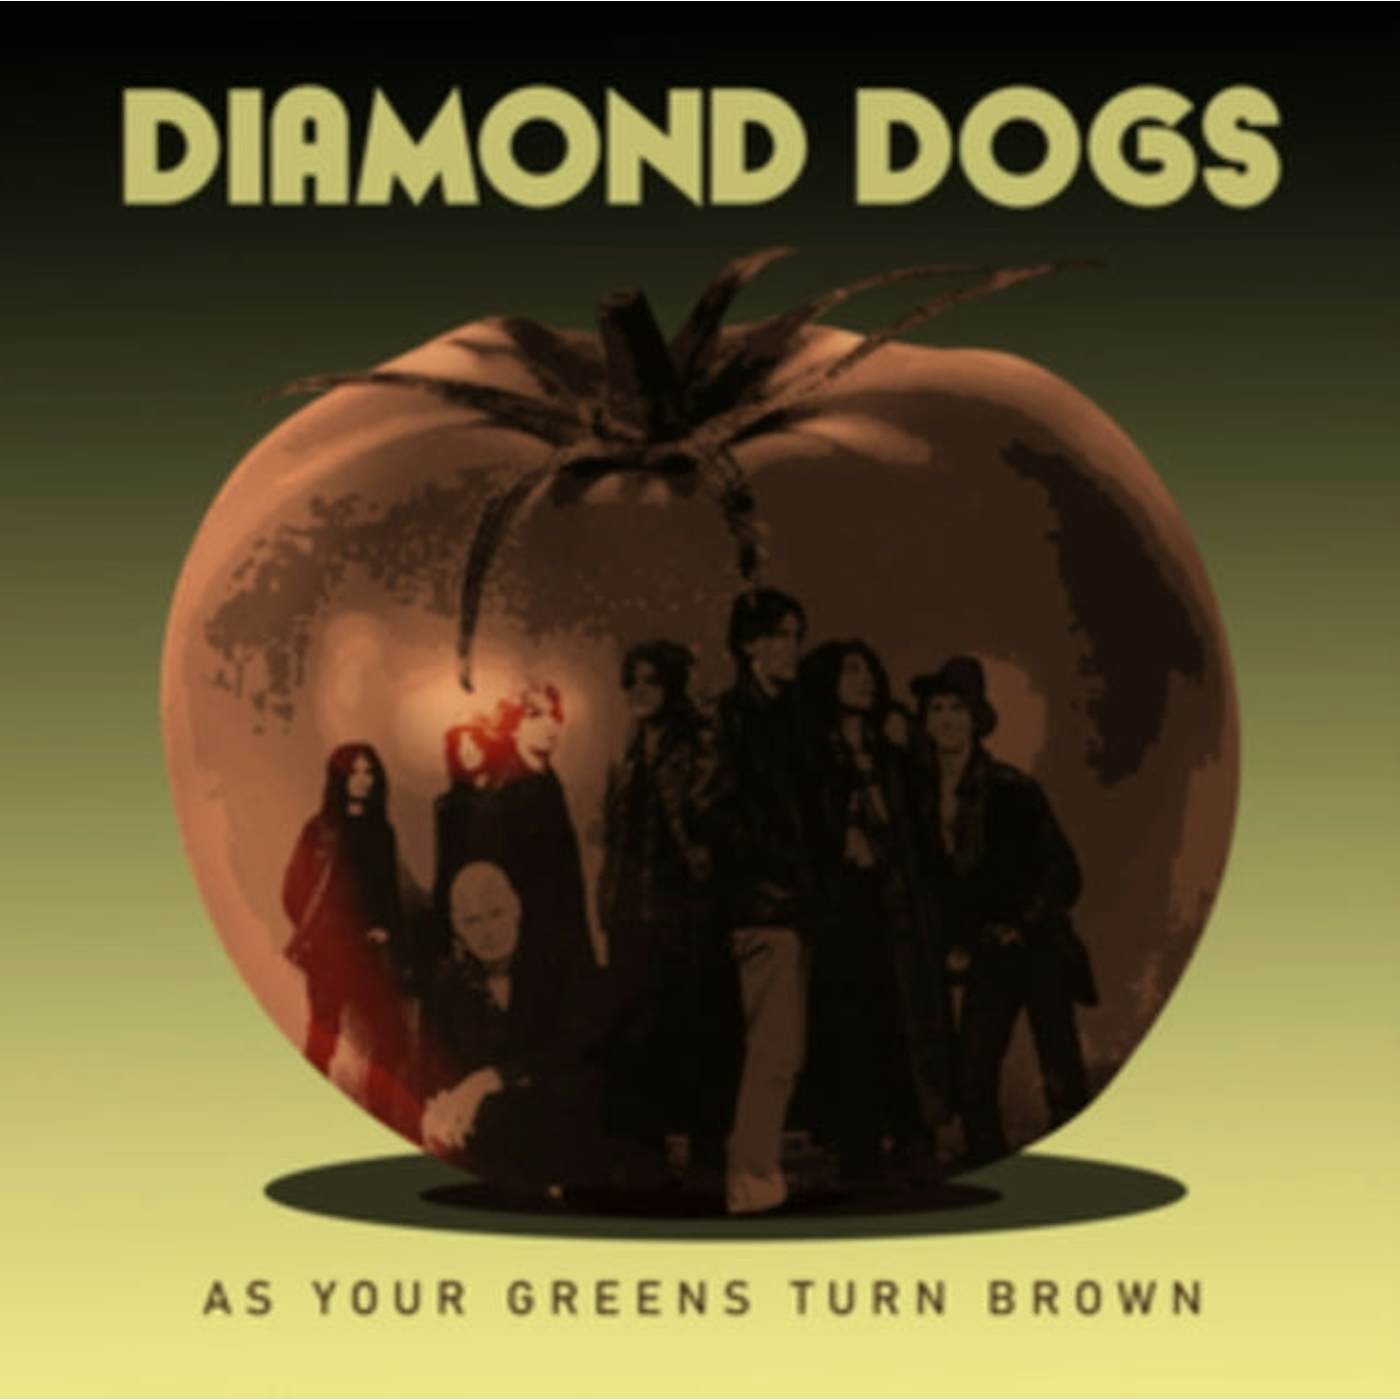 Diamond Dogs LP - As Your Greens Turn Brown (Vinyl)